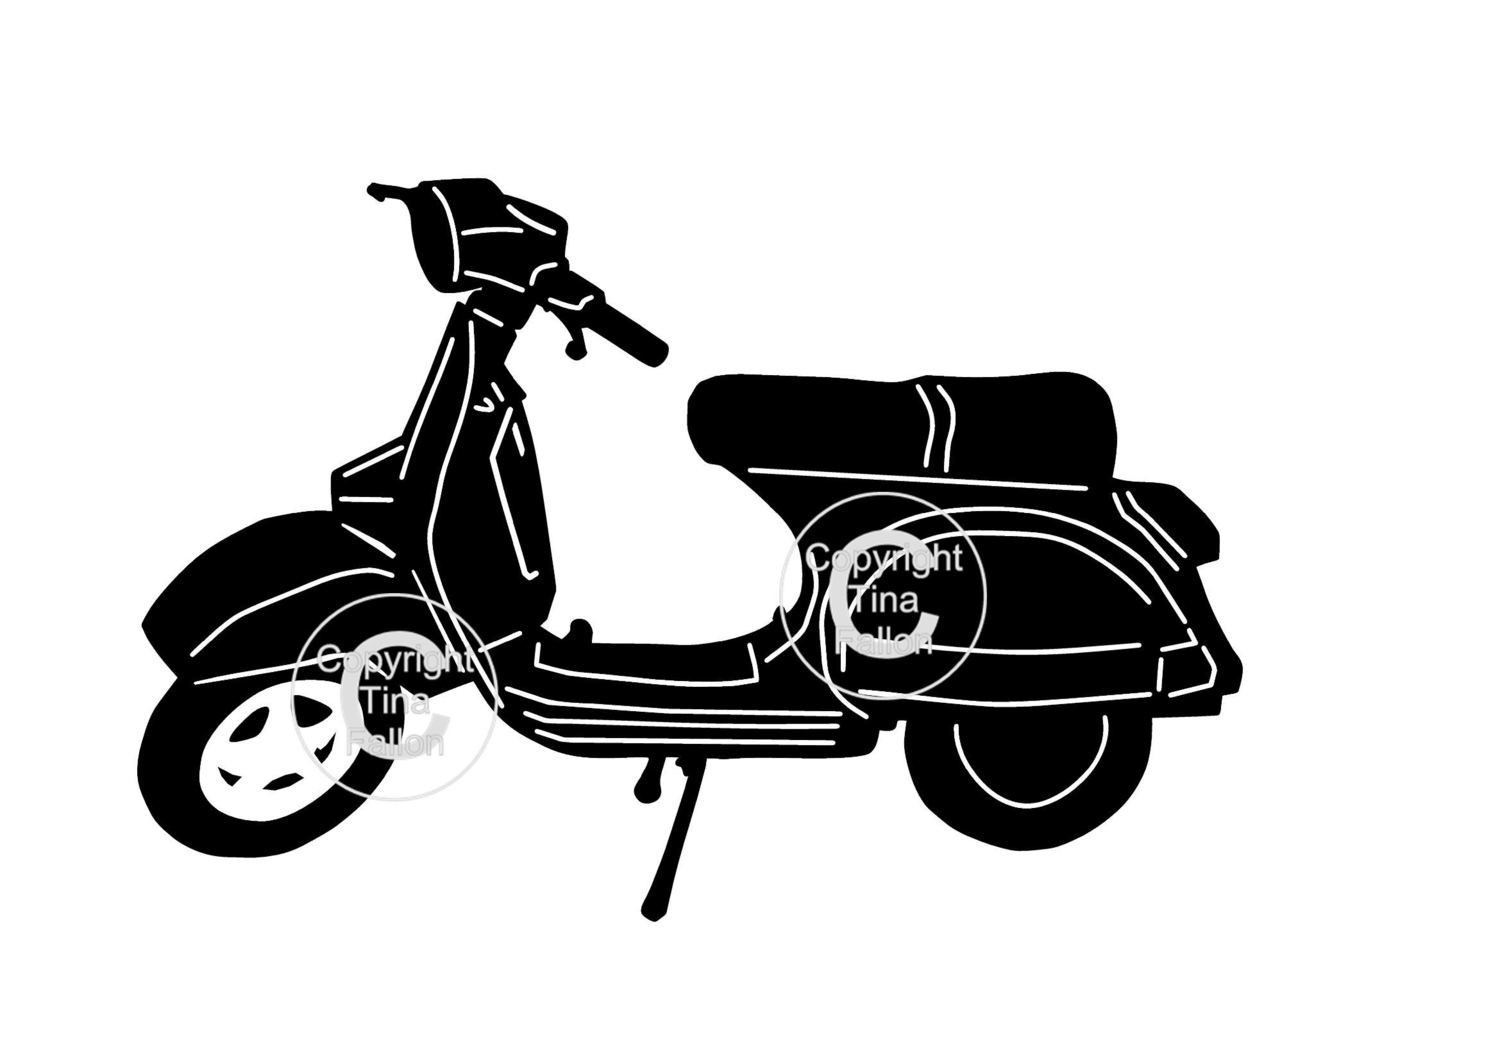 Classic Bike, Motorbike,Motorcycle Vespa silhouette